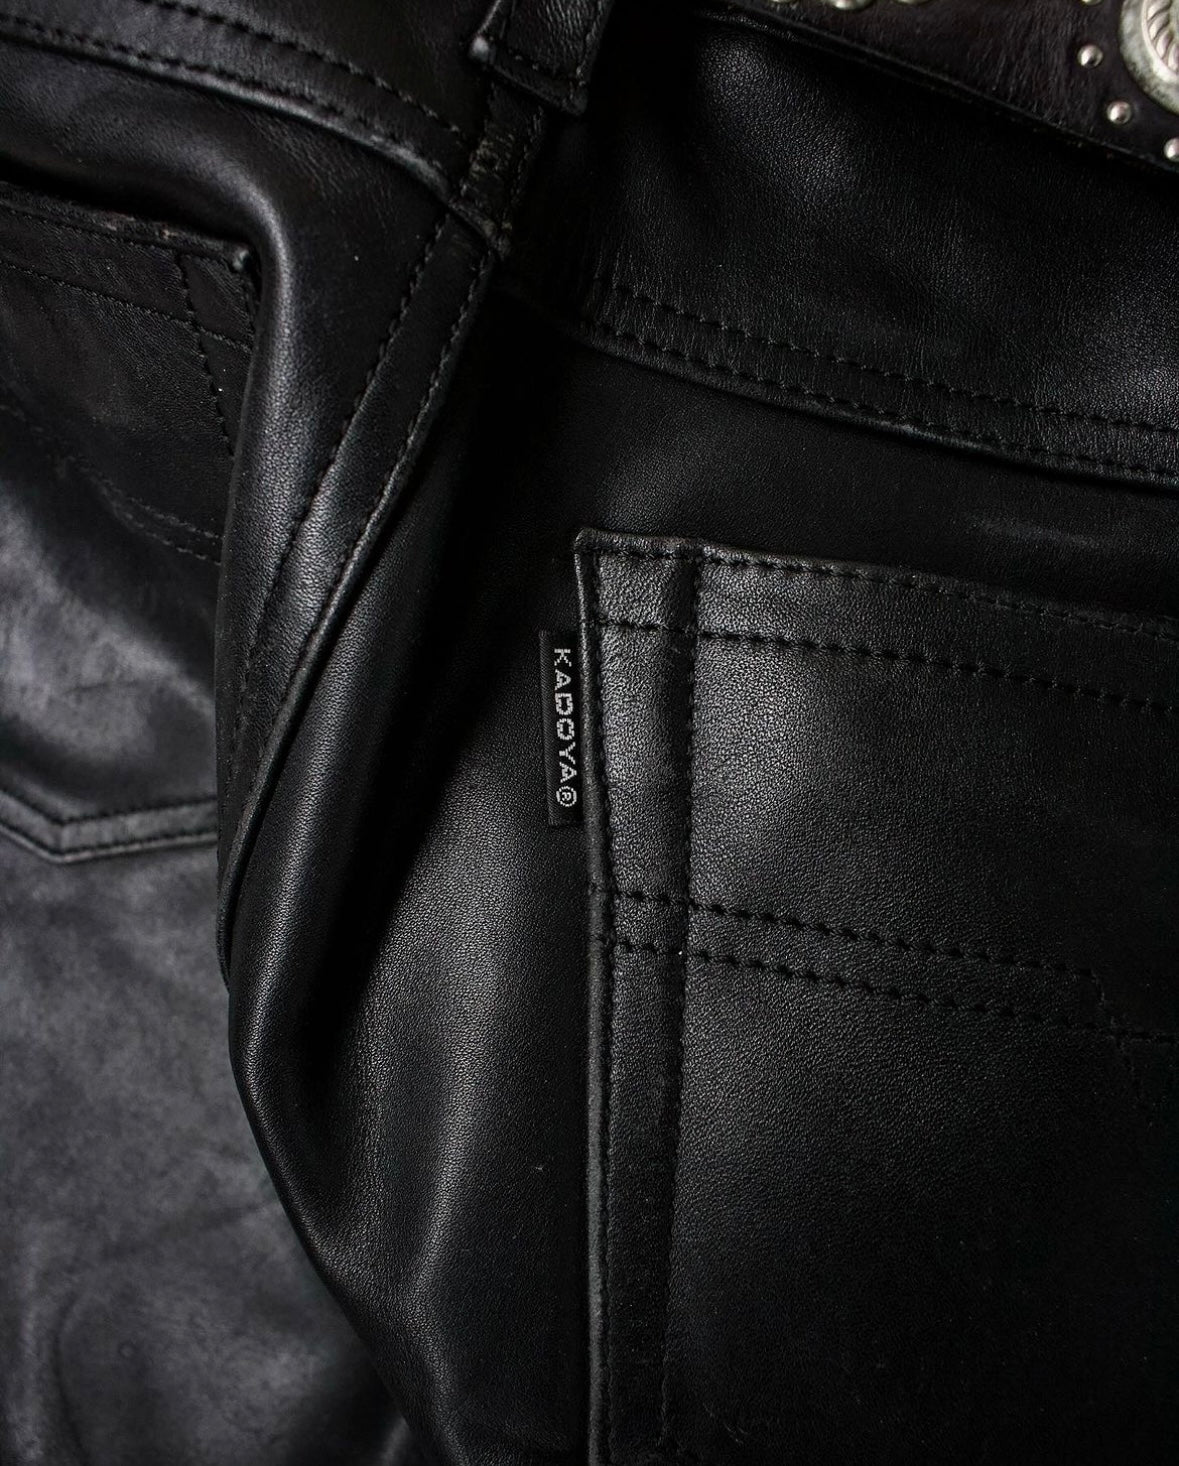 brand tag detail shot Kadoya Raw Cowhide Motorcycle Leather Pants